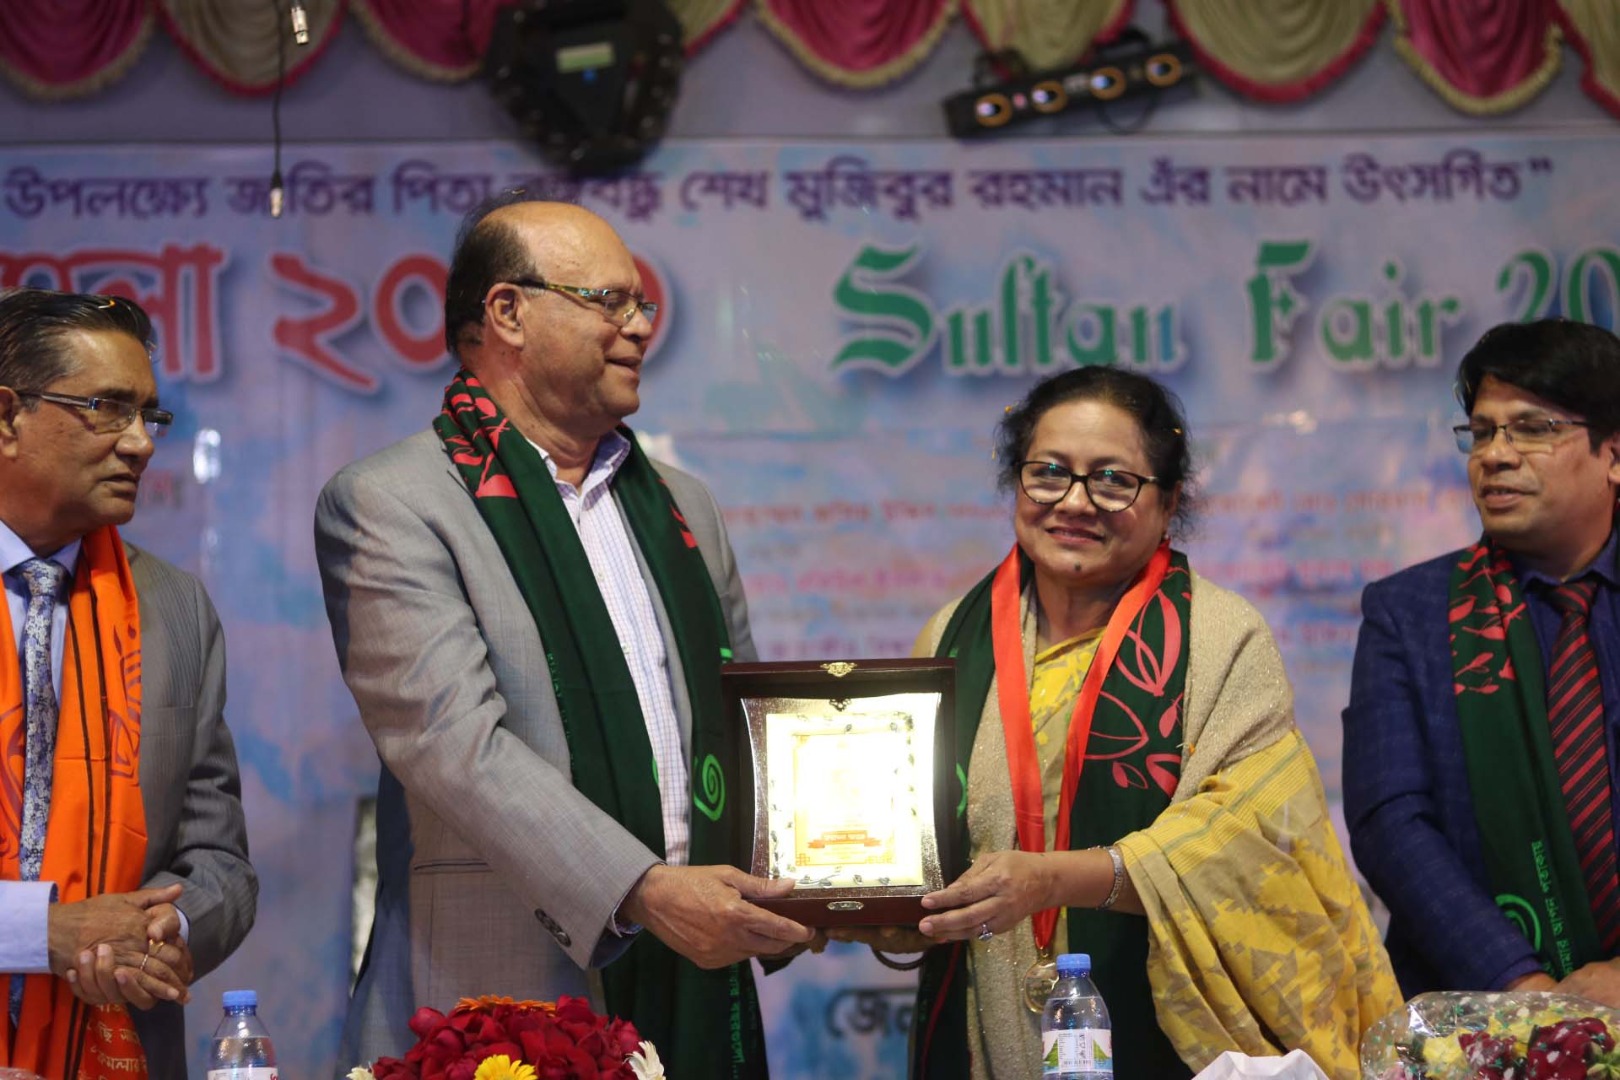 Bangladesh Shilpakala Academy was awarded the 'Sultan Gold Medal 2020' Professor D. Farida Zaman